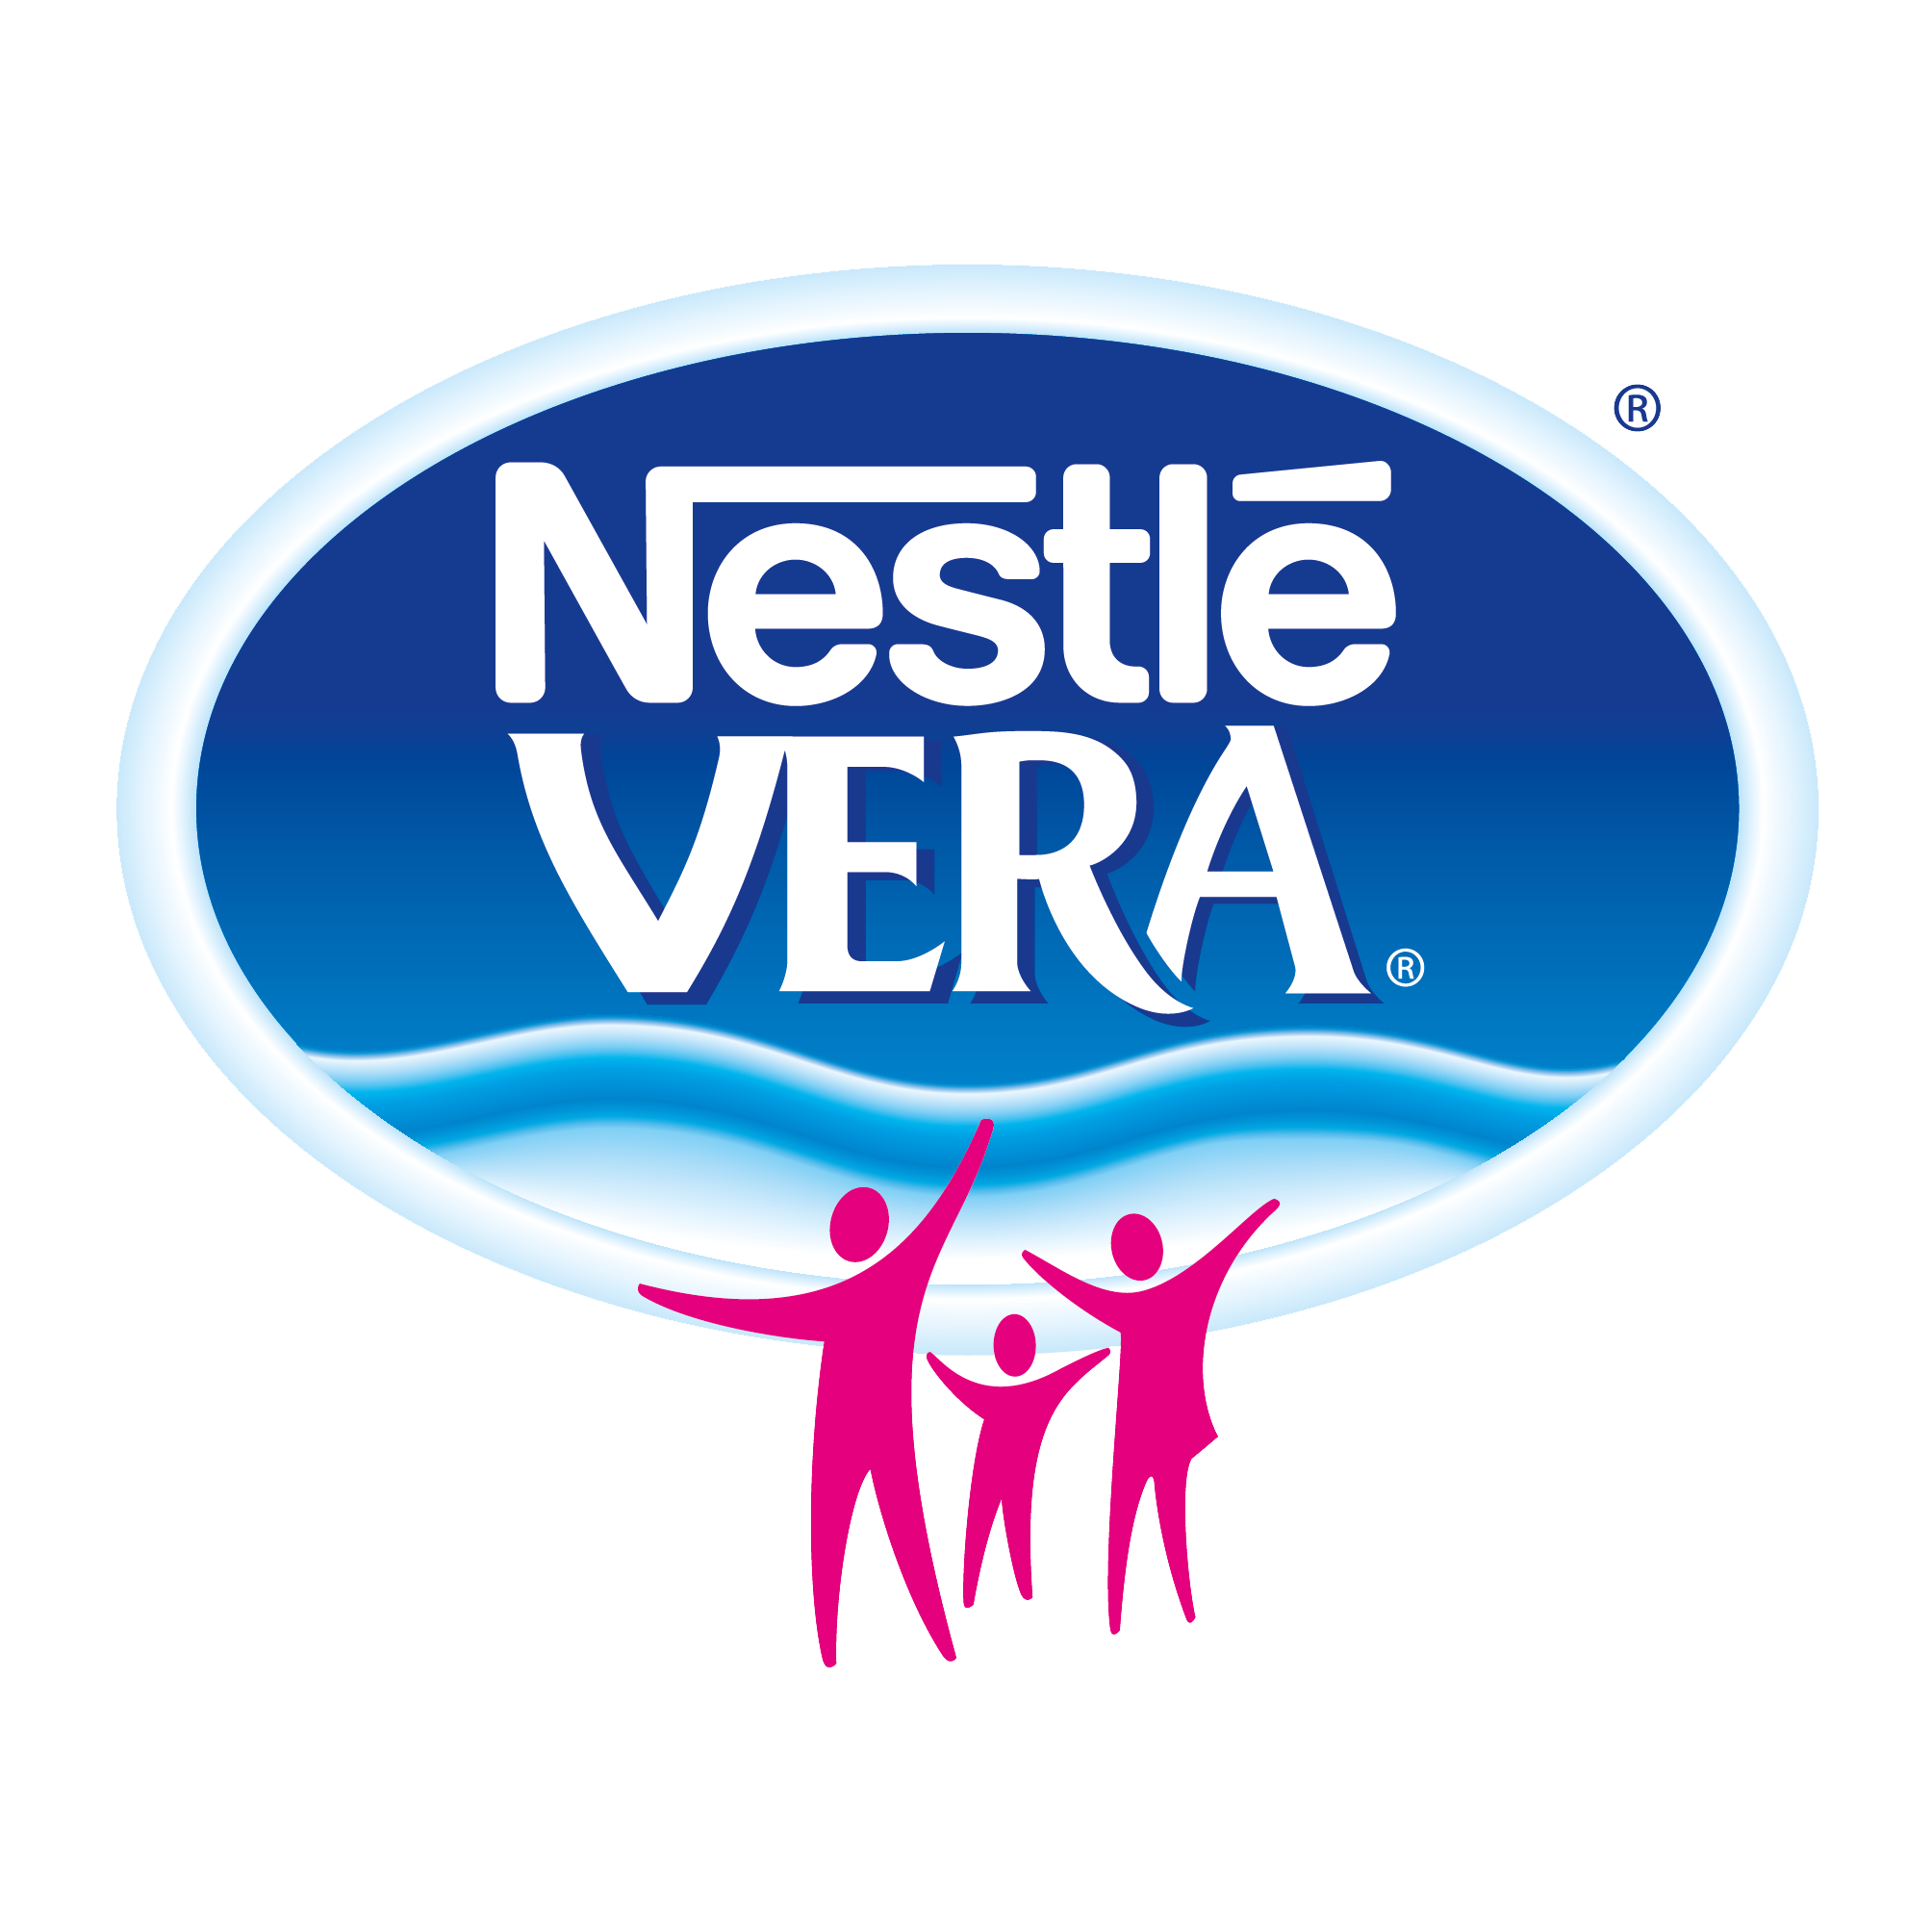 Nestle Vera